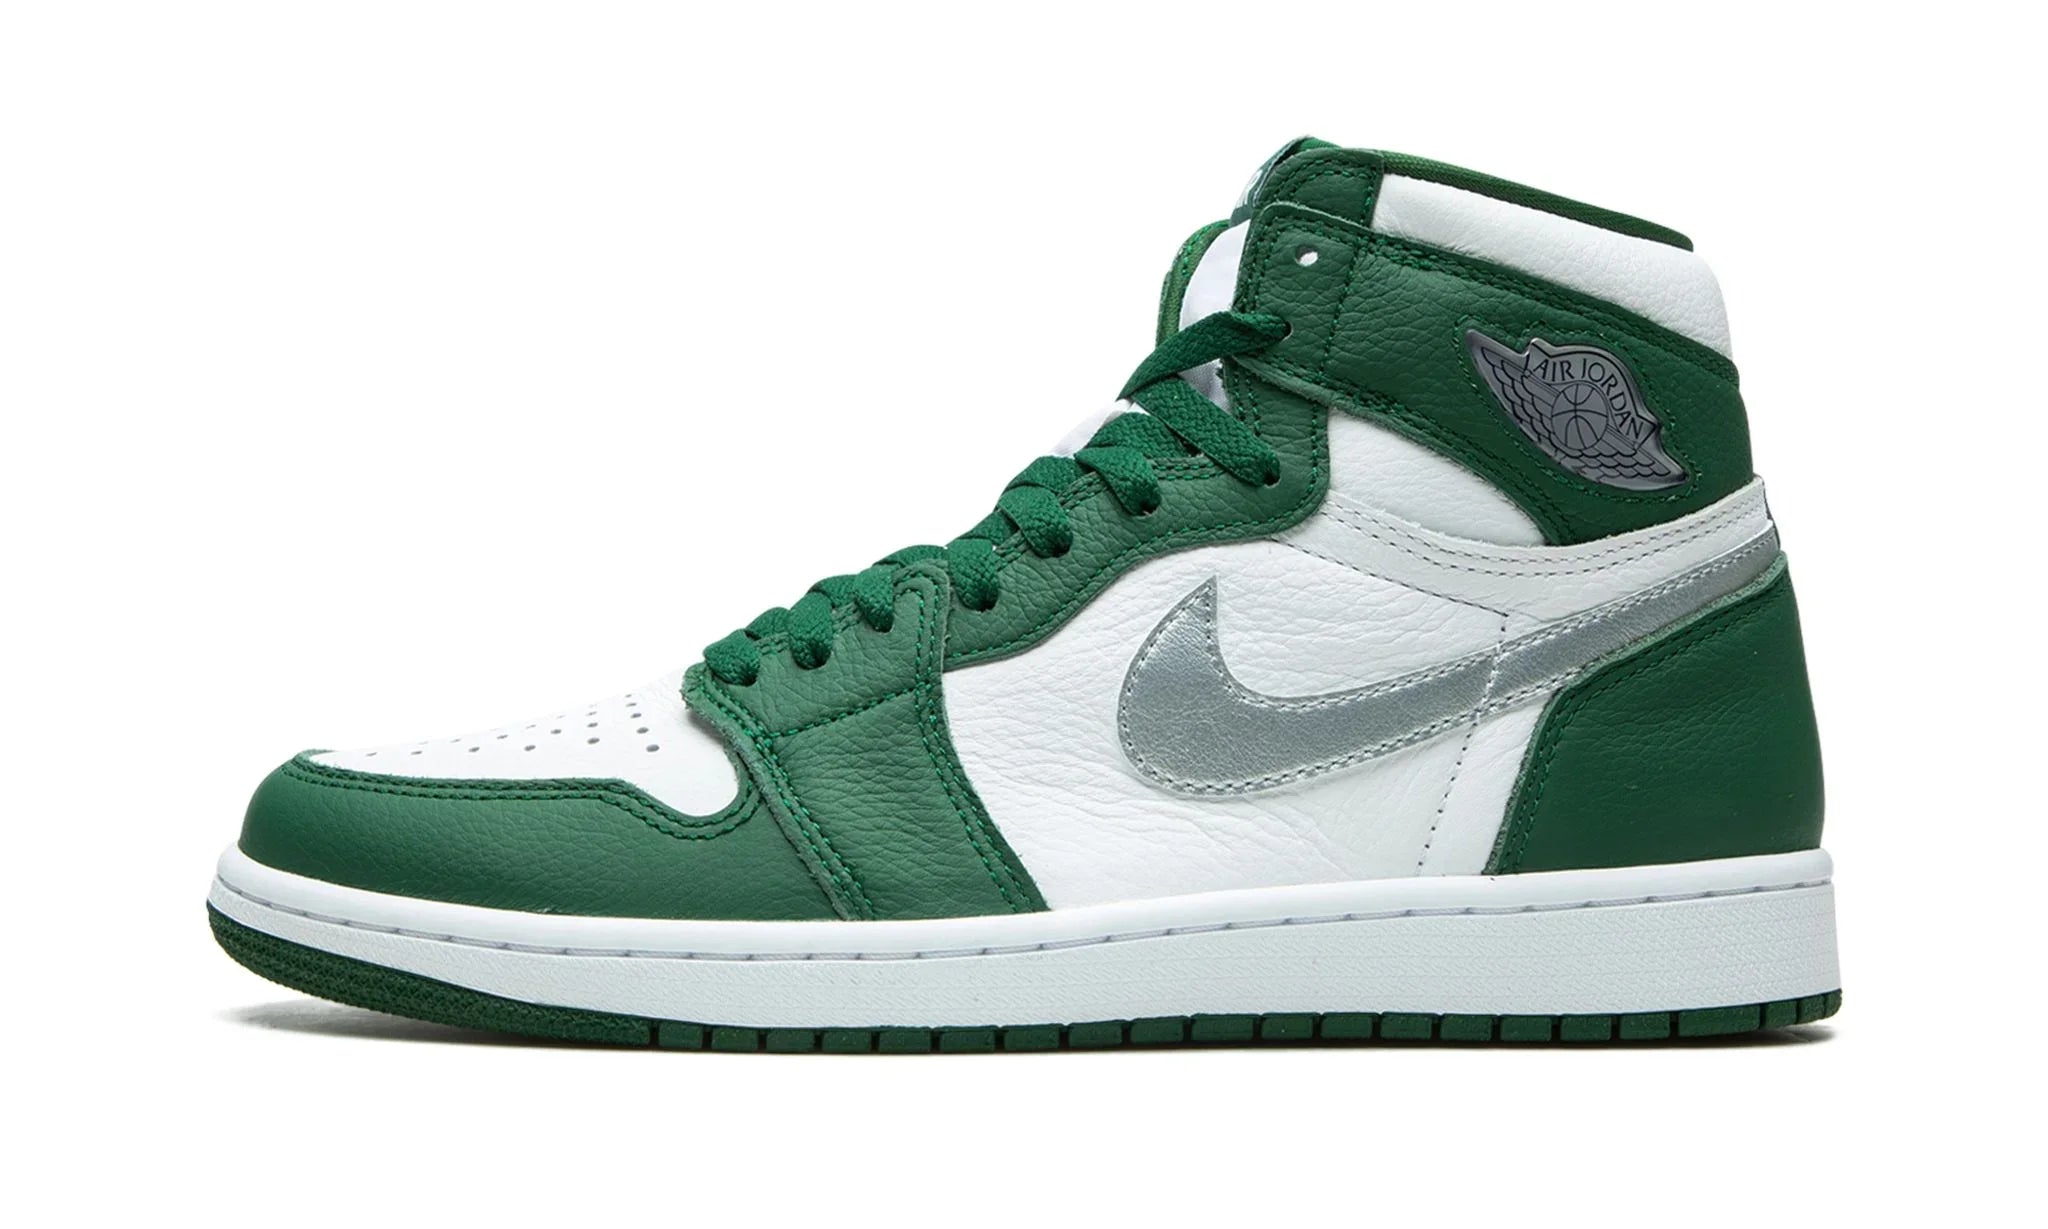 Jordan 1 High "Gorge Green" - 575441-303 - Sneakers